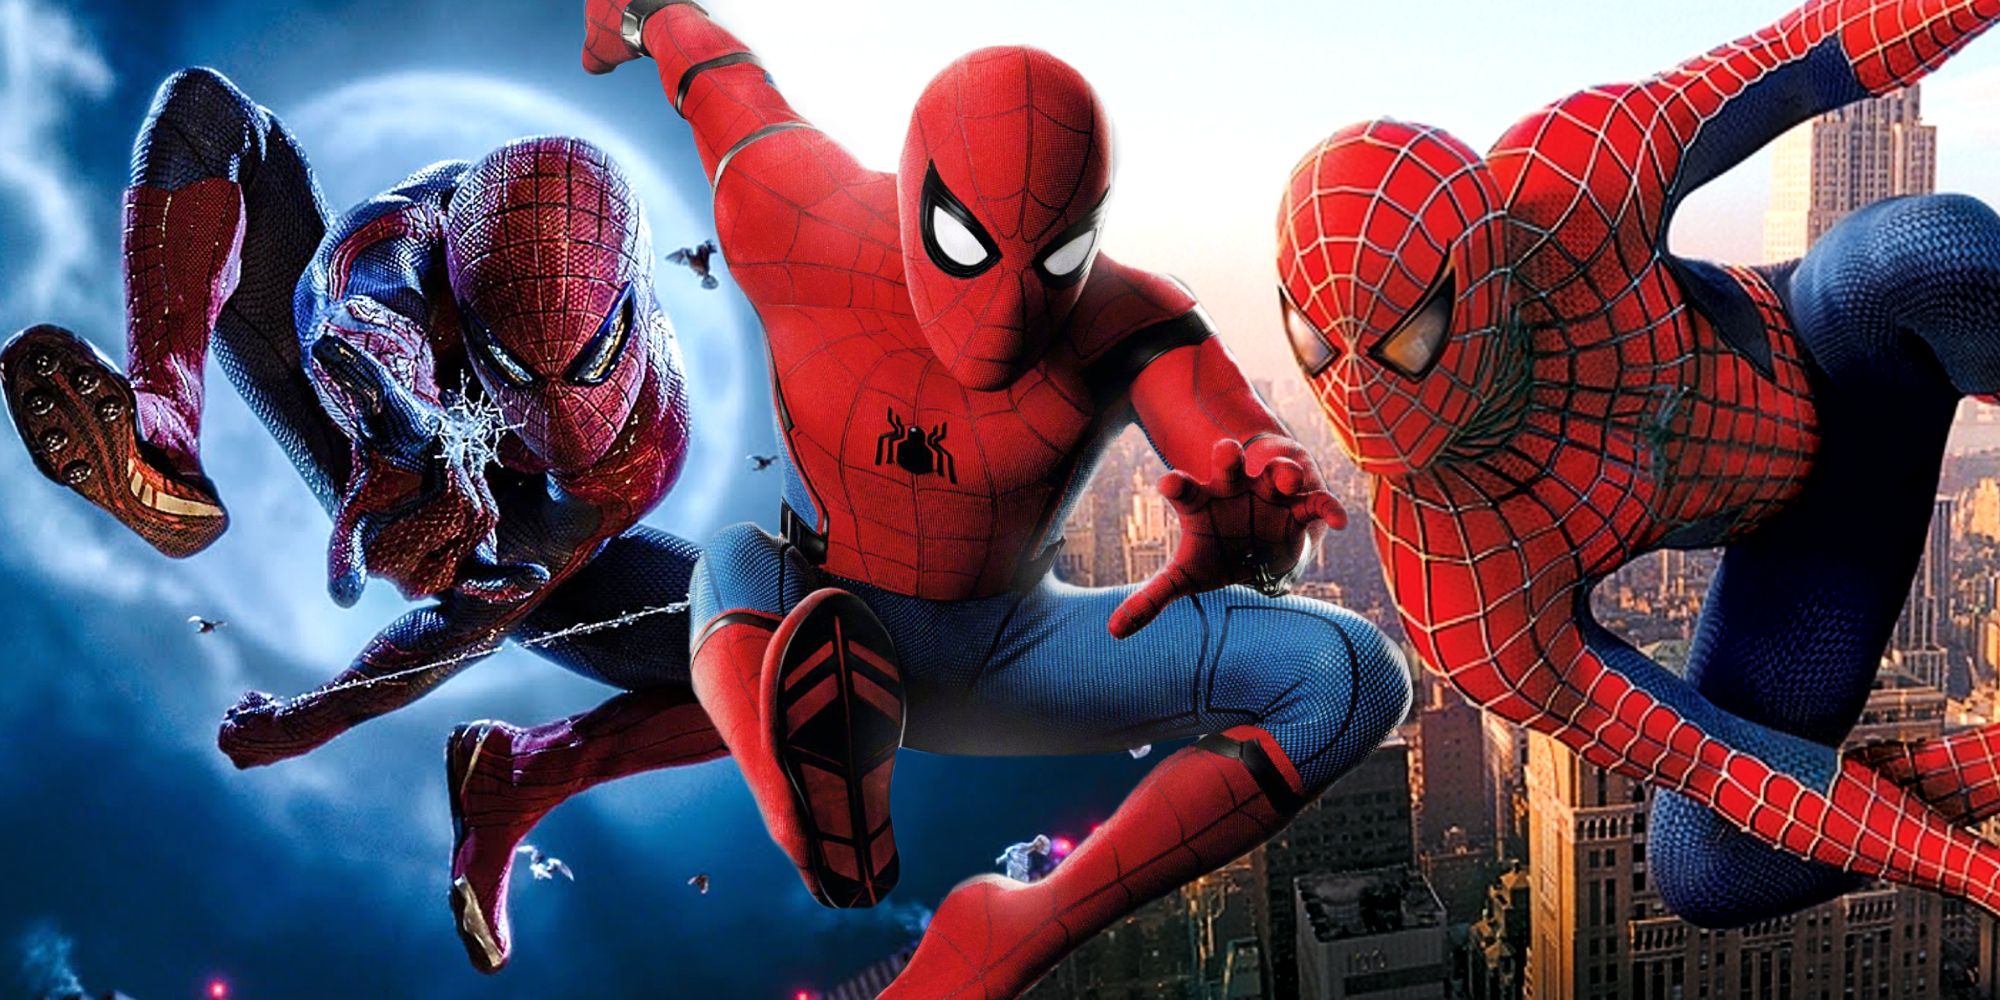 Final Swings in Spider-Man Movies